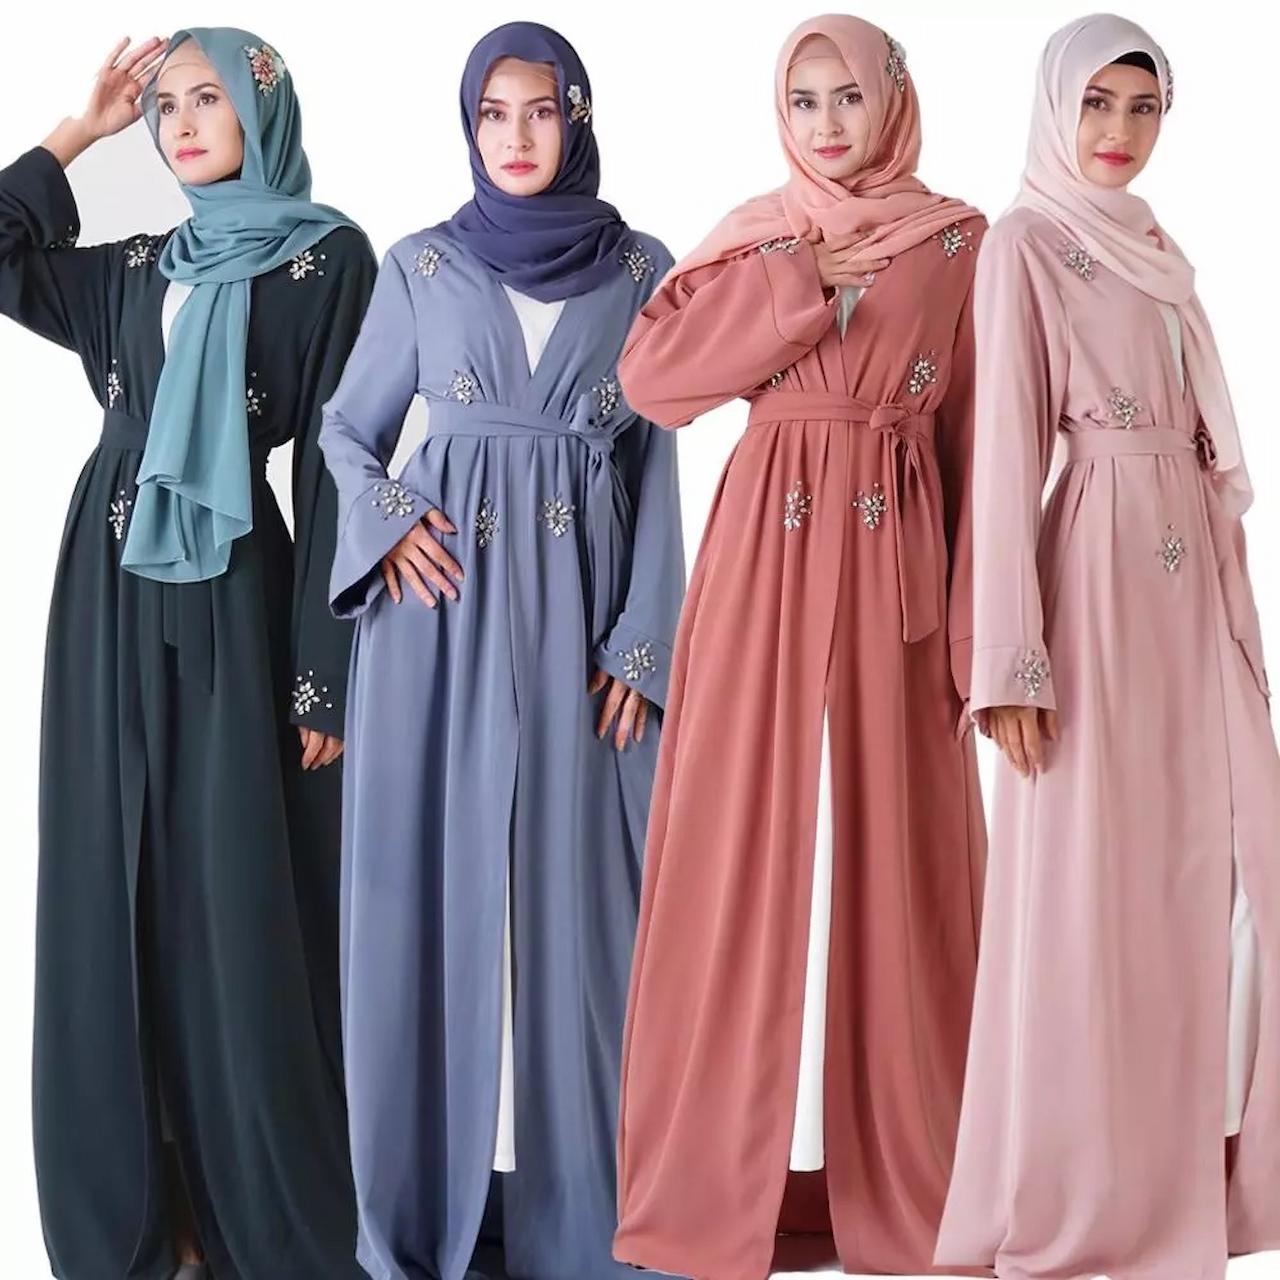 Muslim Women’s Clothes Online